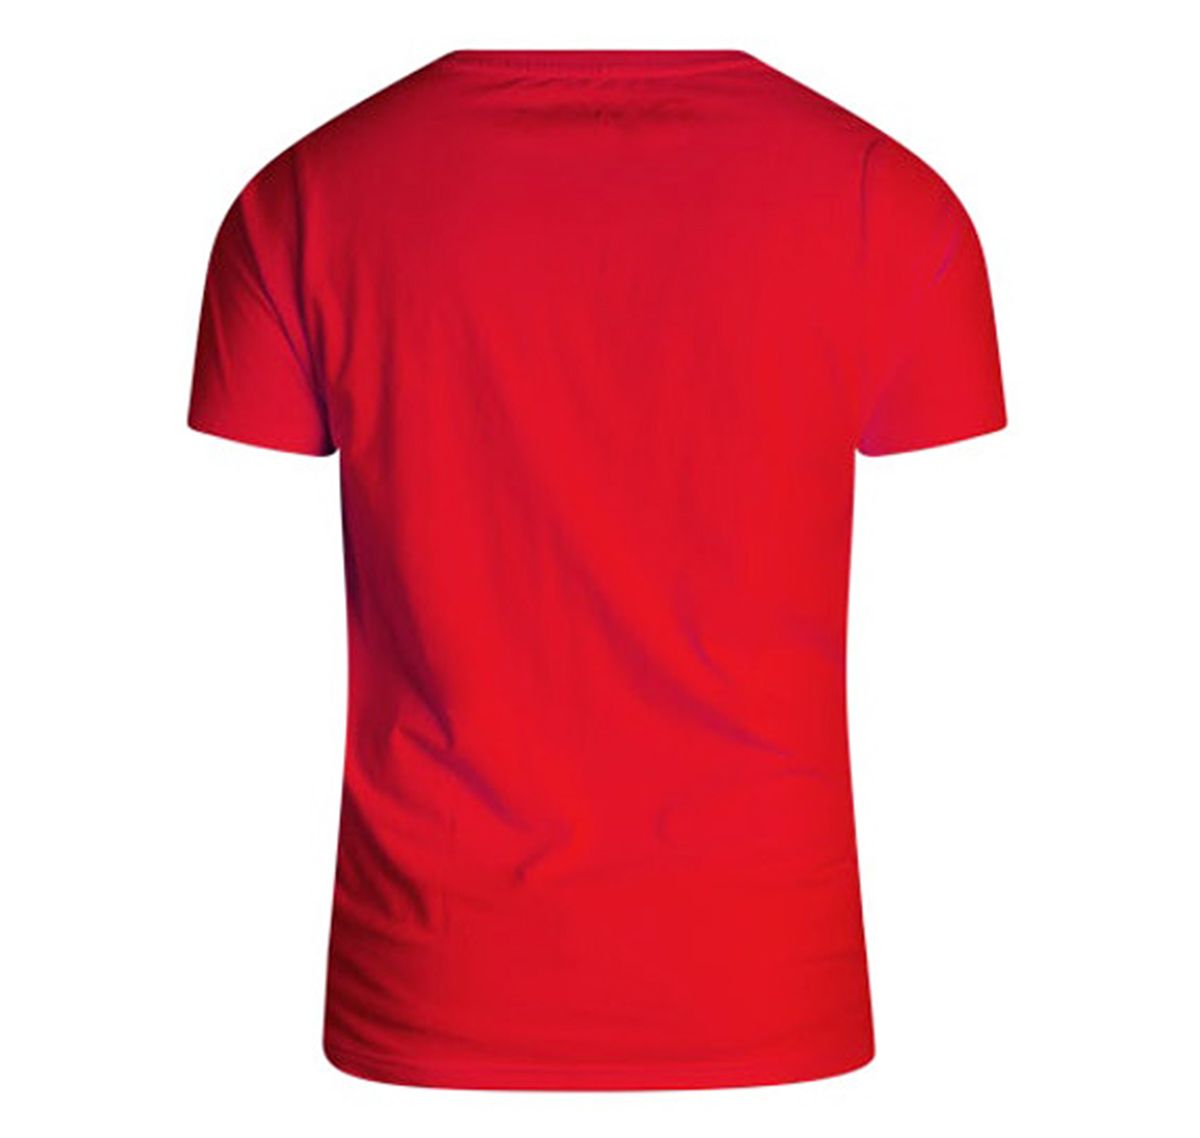 aussieBum T-Shirt DESIGNER TEE SUNSET, red